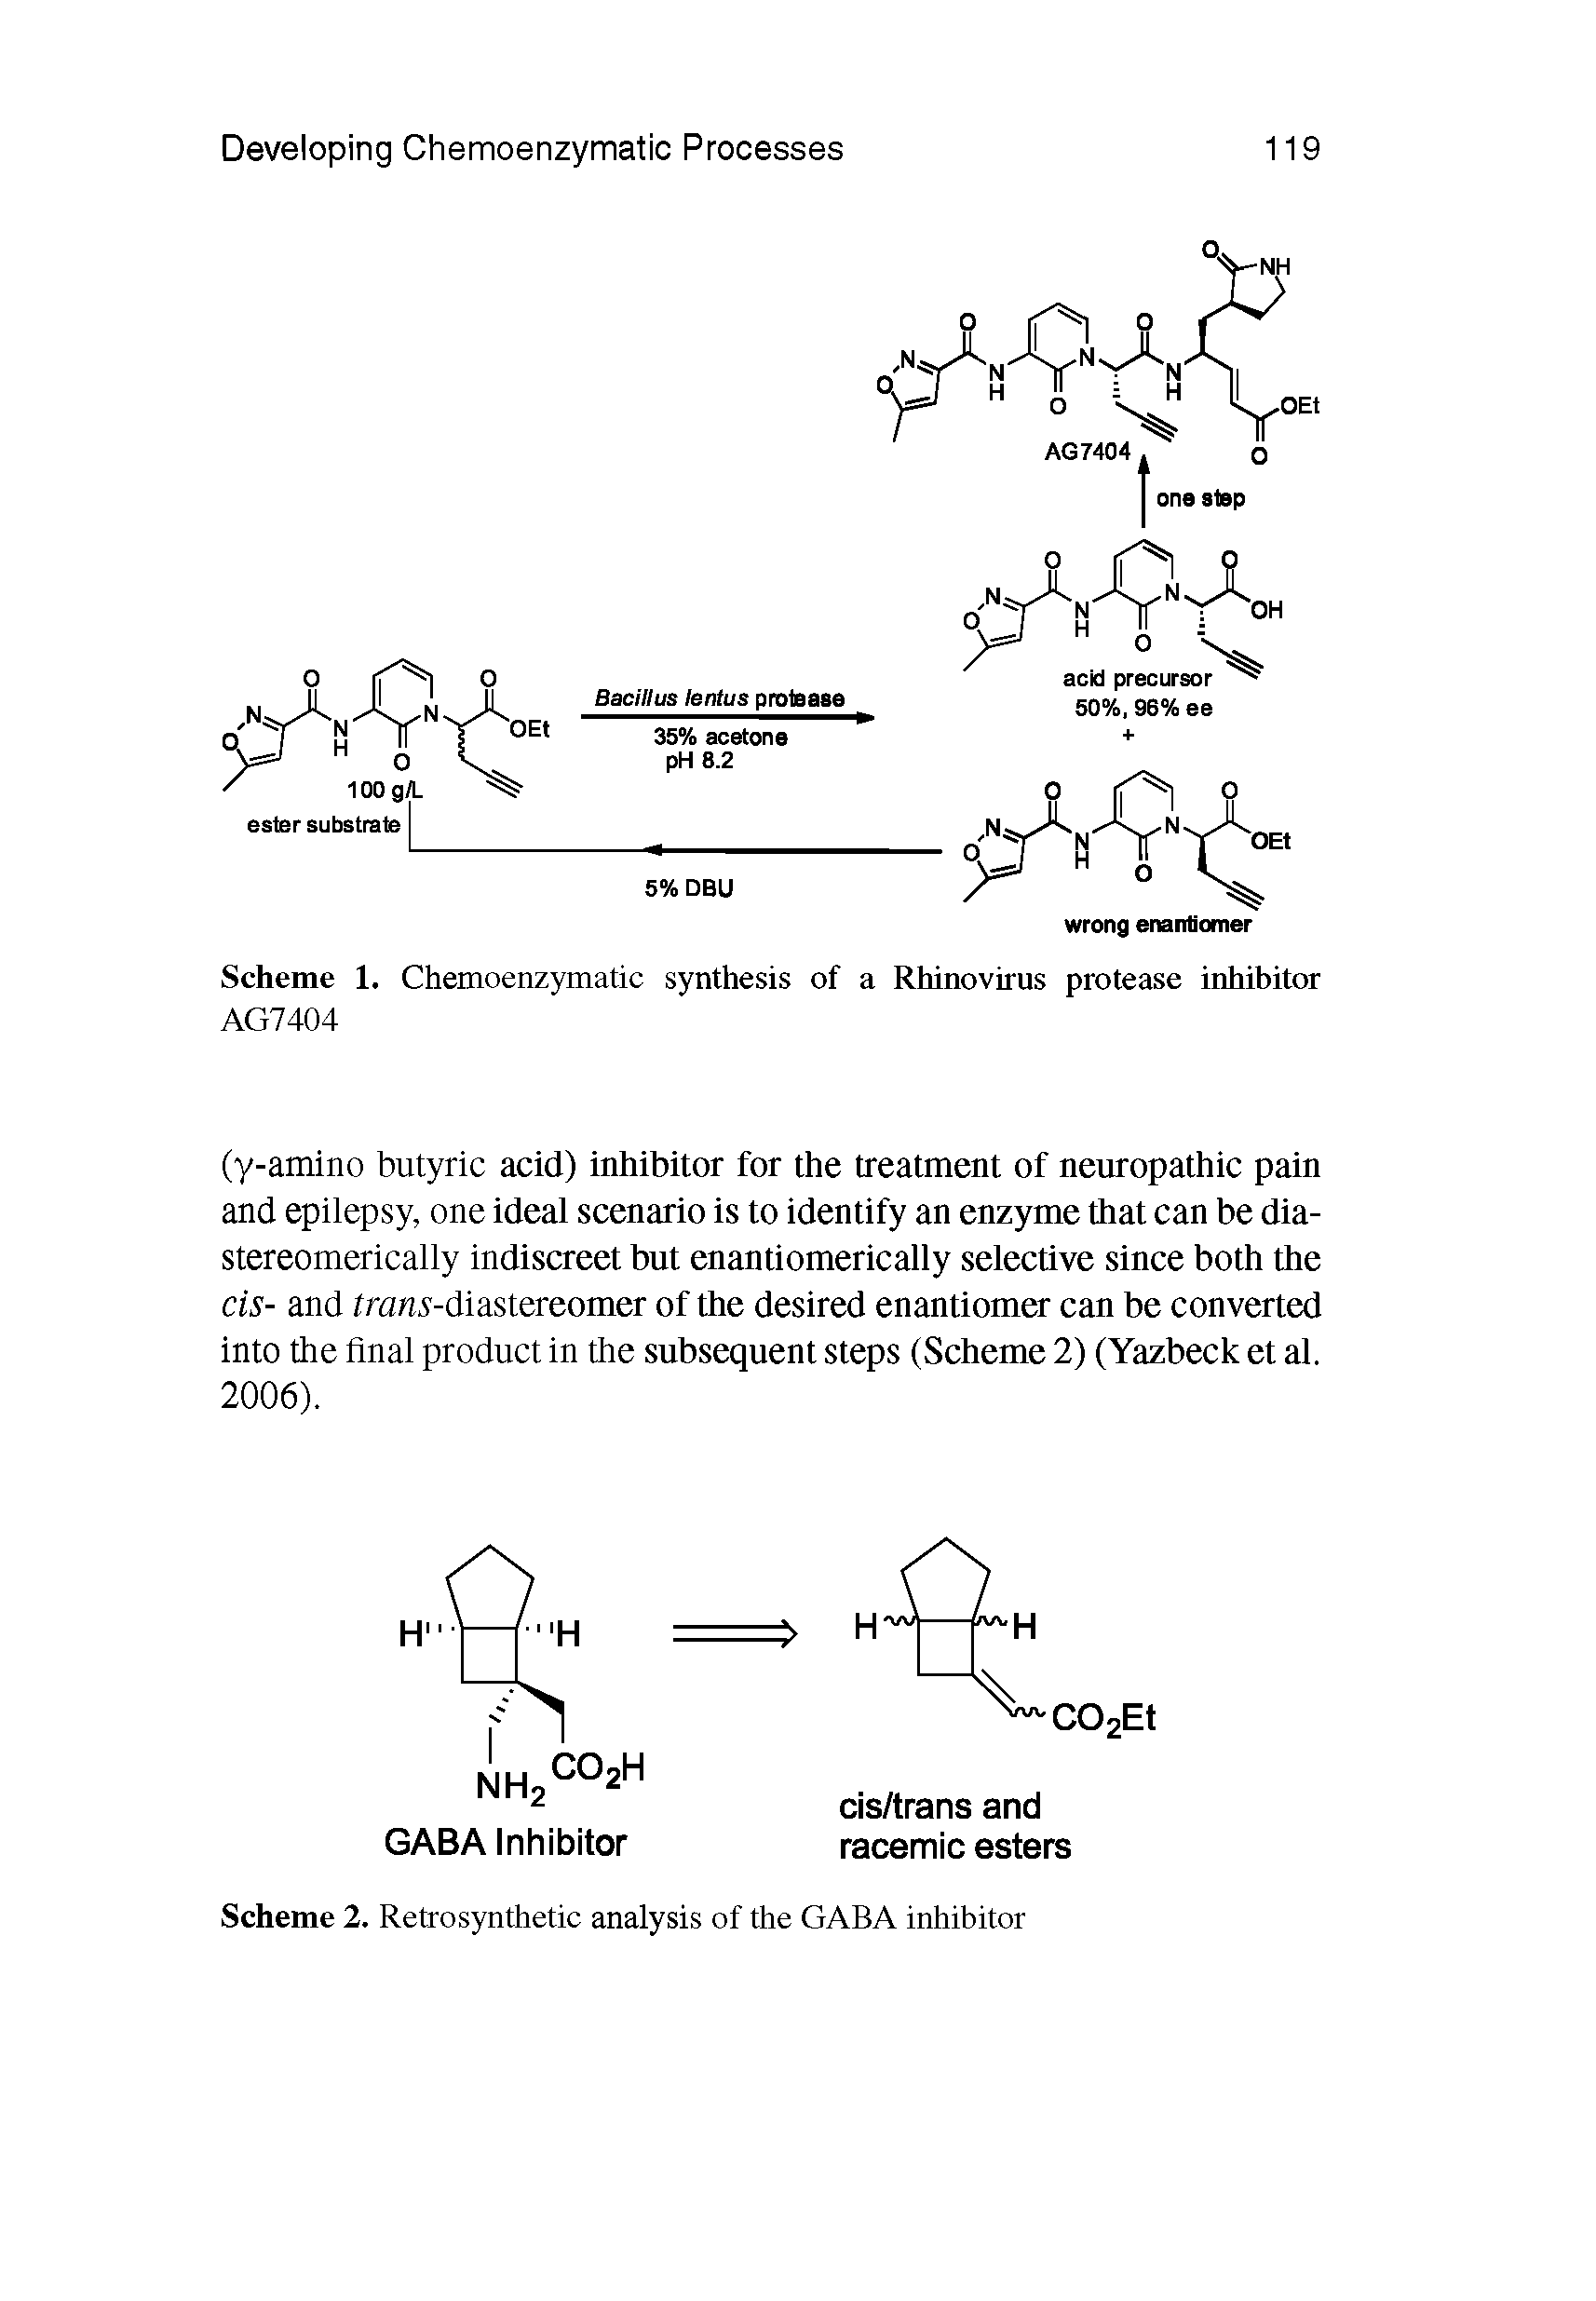 Scheme 2. Retro synthetic analysis of the GABA inhibitor...